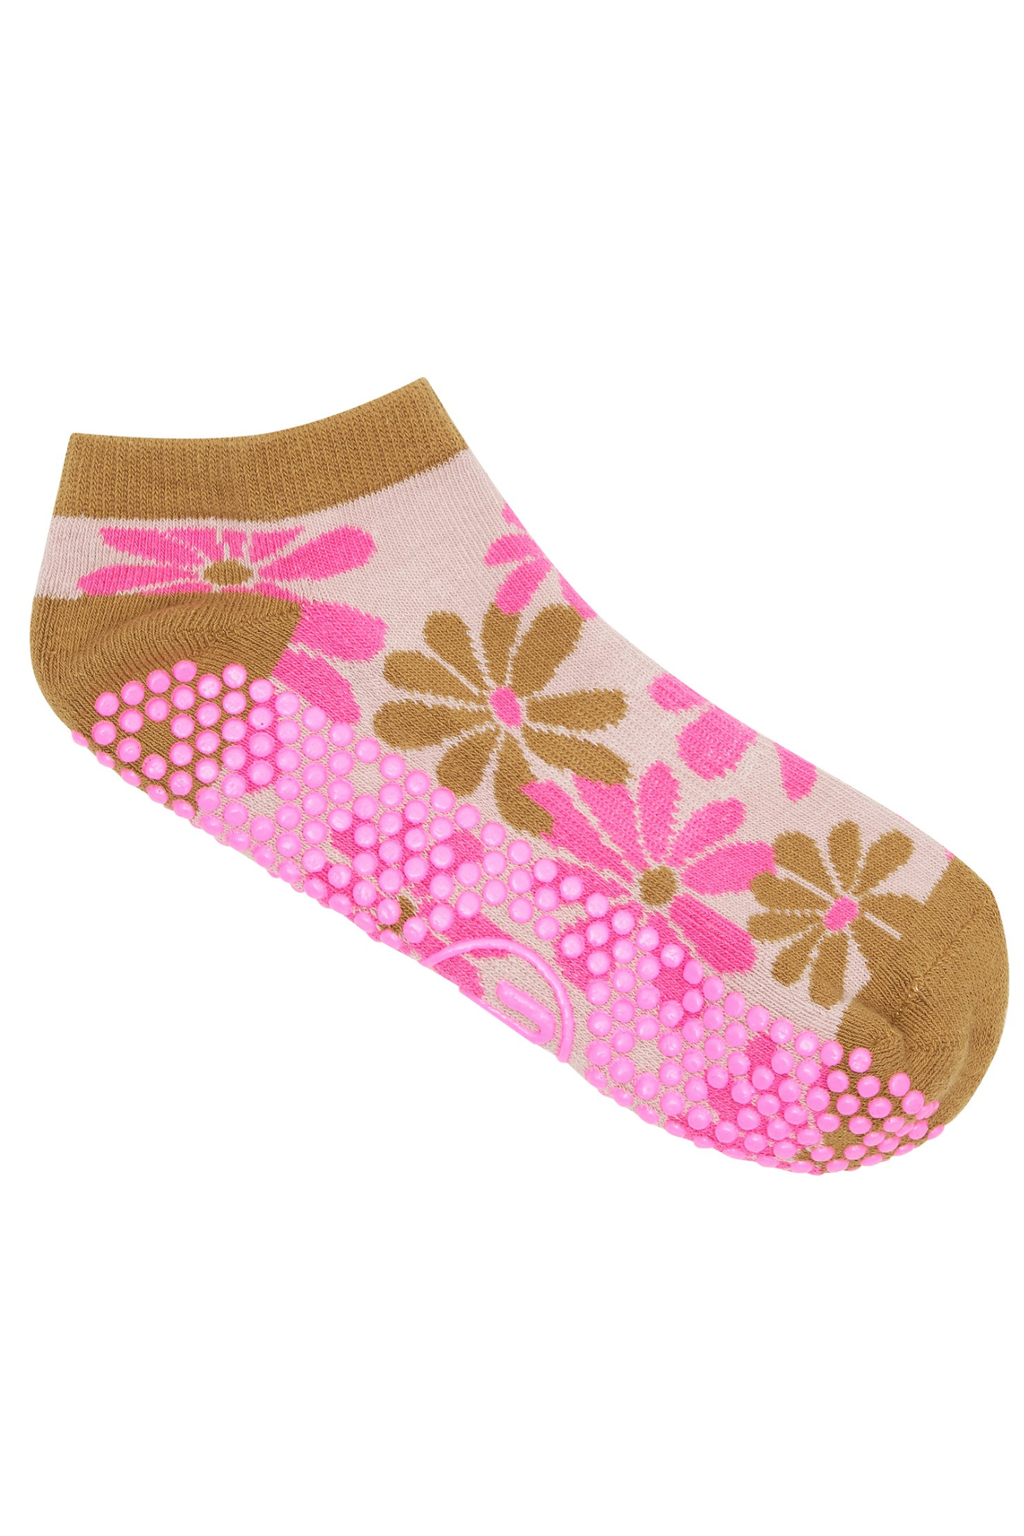 Classic Low Rise Grip Socks - Retro Floral